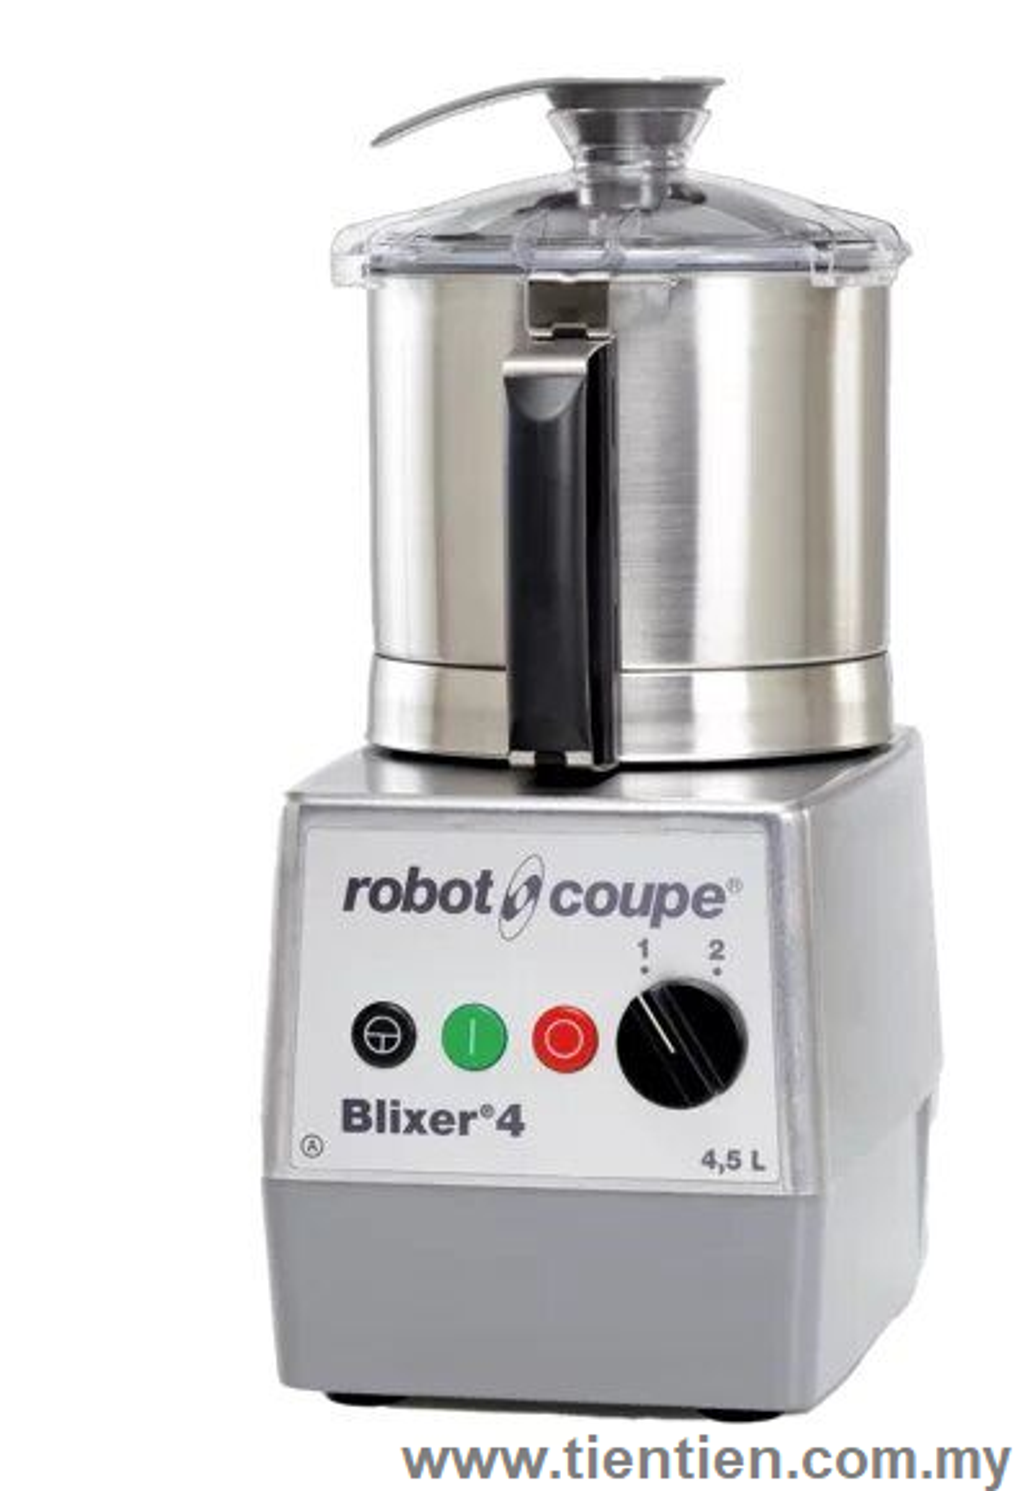 robot-coupe-4.5-blender-mixer-double-elulsifier-speed-blixer-4a-3ph-tientien-malaysia.png